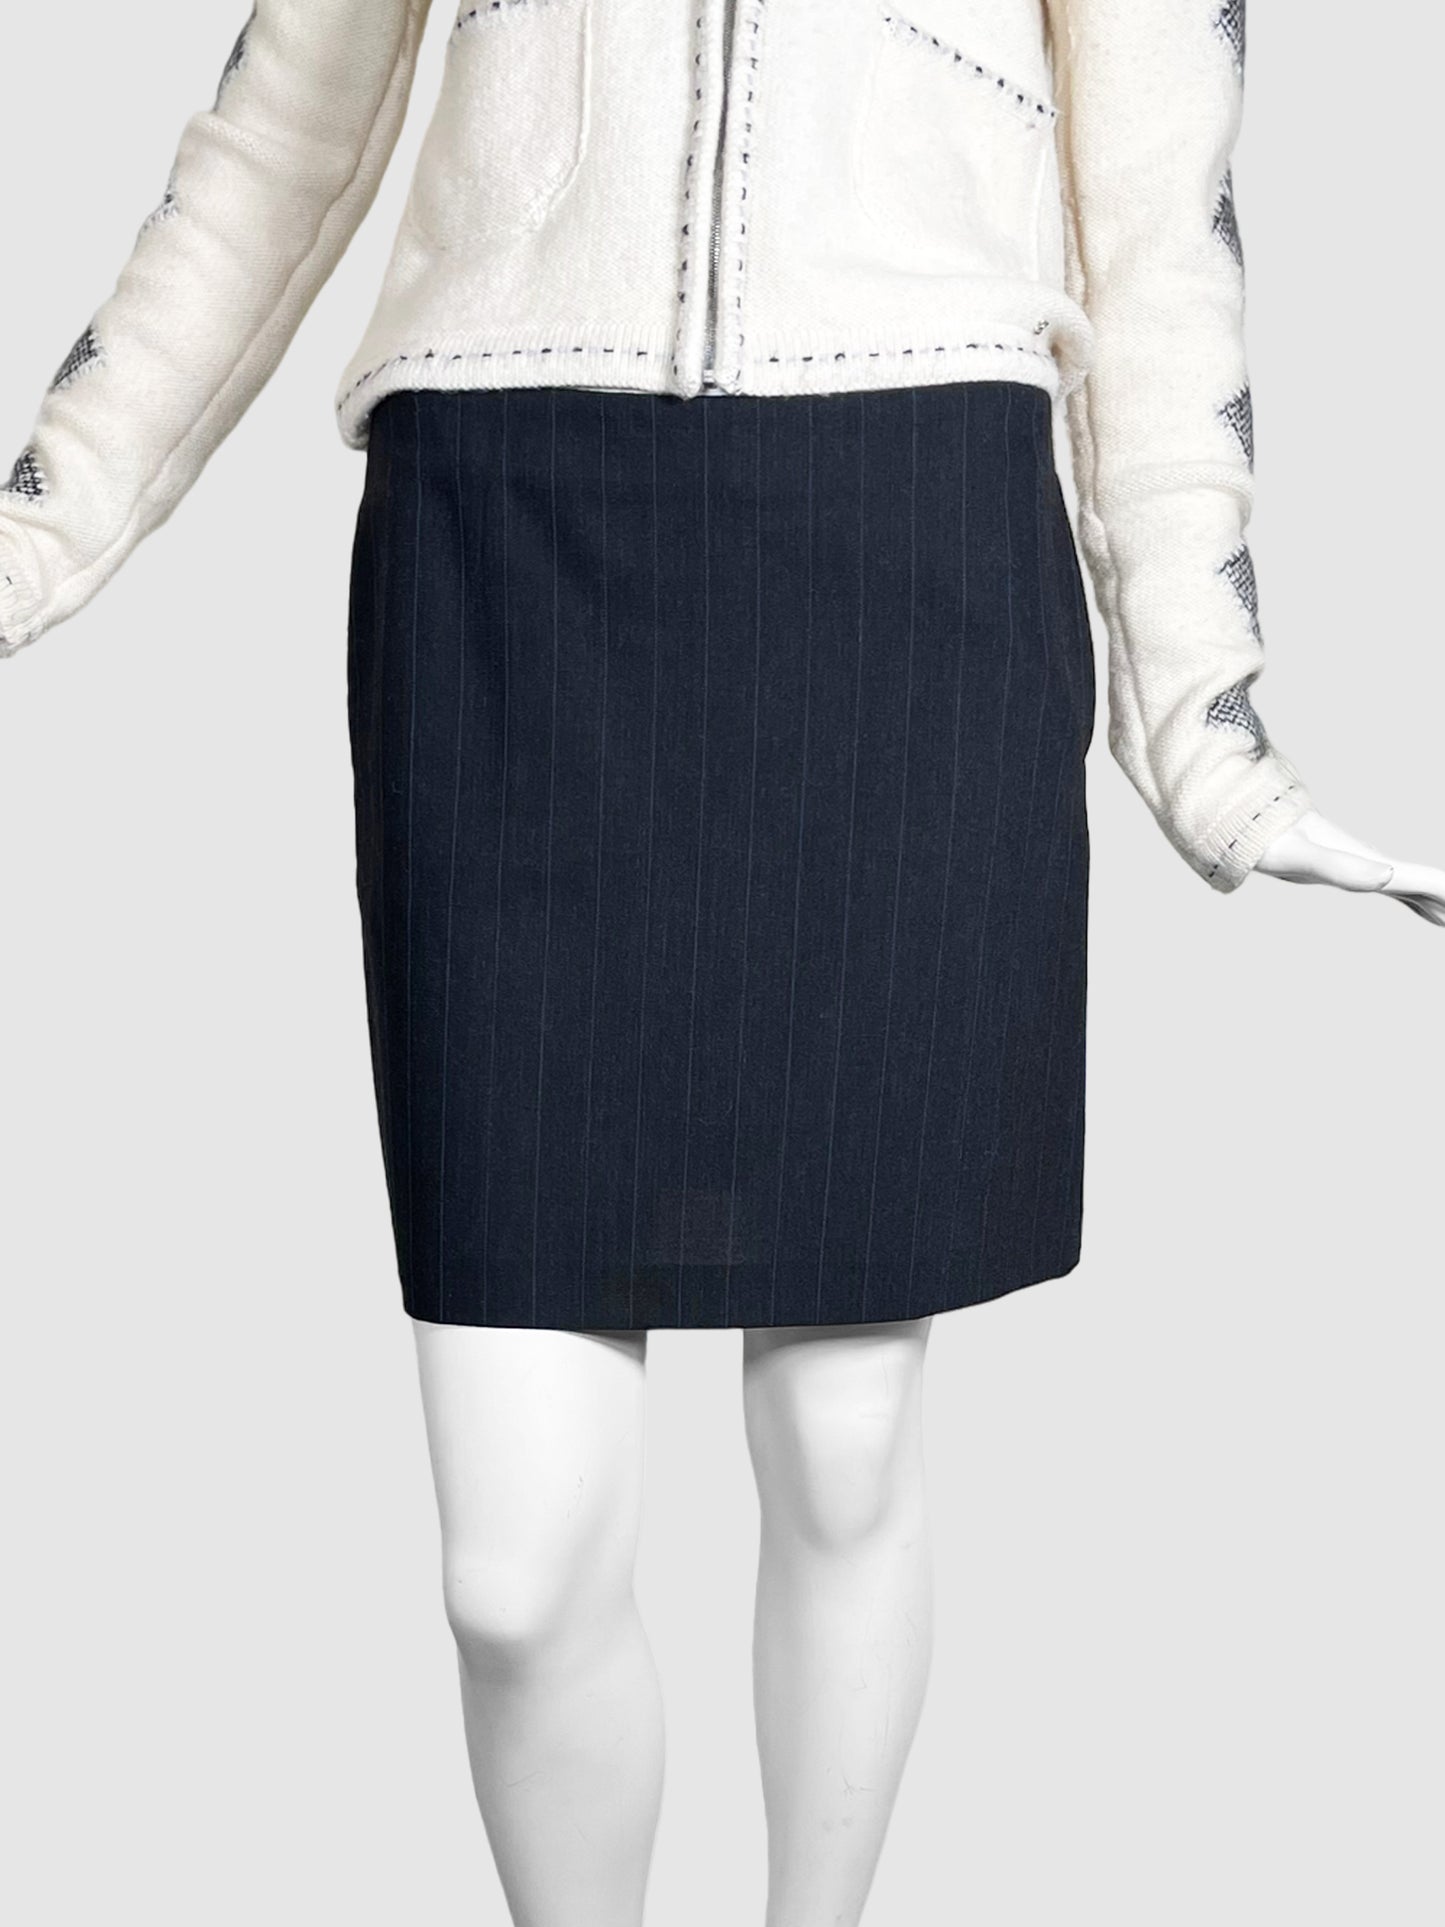 Dolce & Gabbana Striped Wool Skirt - Size 42